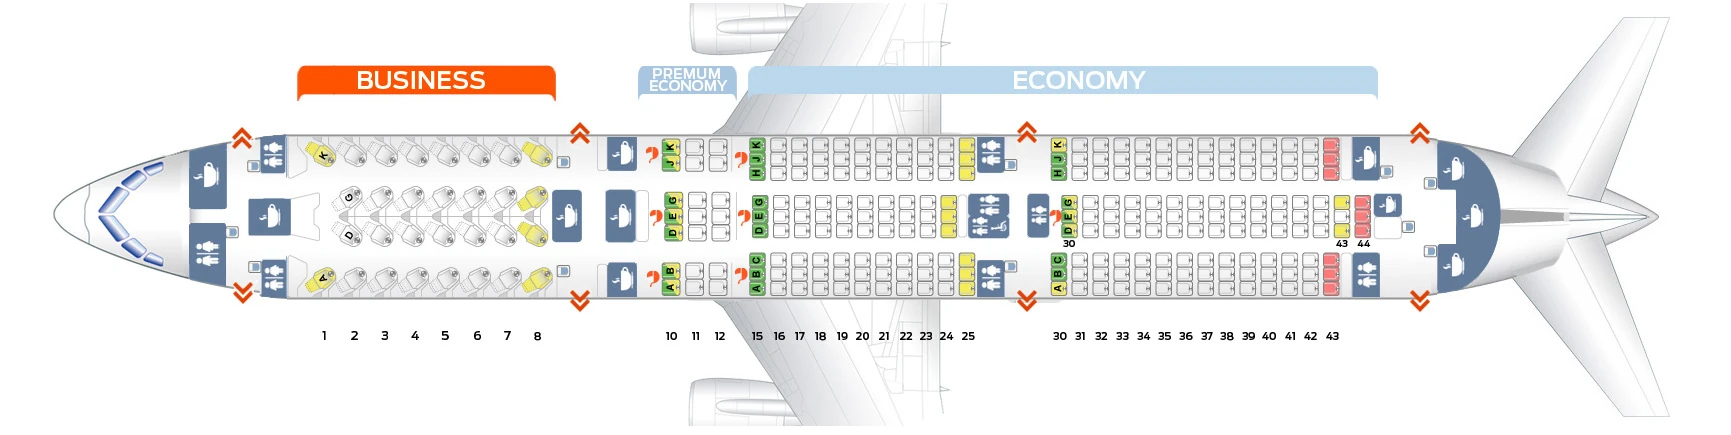 Boeing 787-9 Air France Plan Cabine